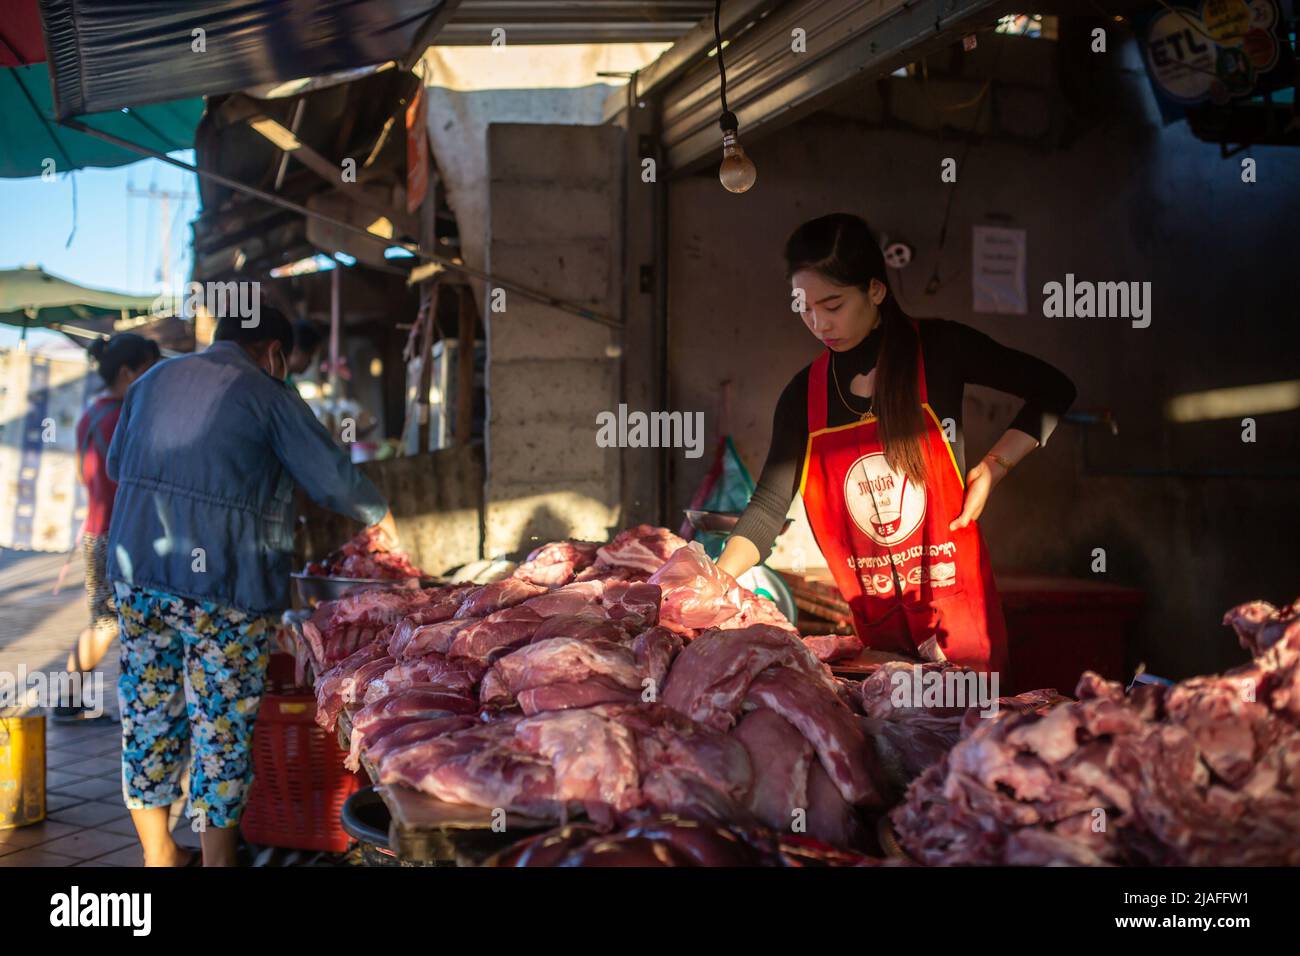 Luang Prabang, Laos - November 15, 2017: Meat seller in Luang Prabang, Laos. Stock Photo